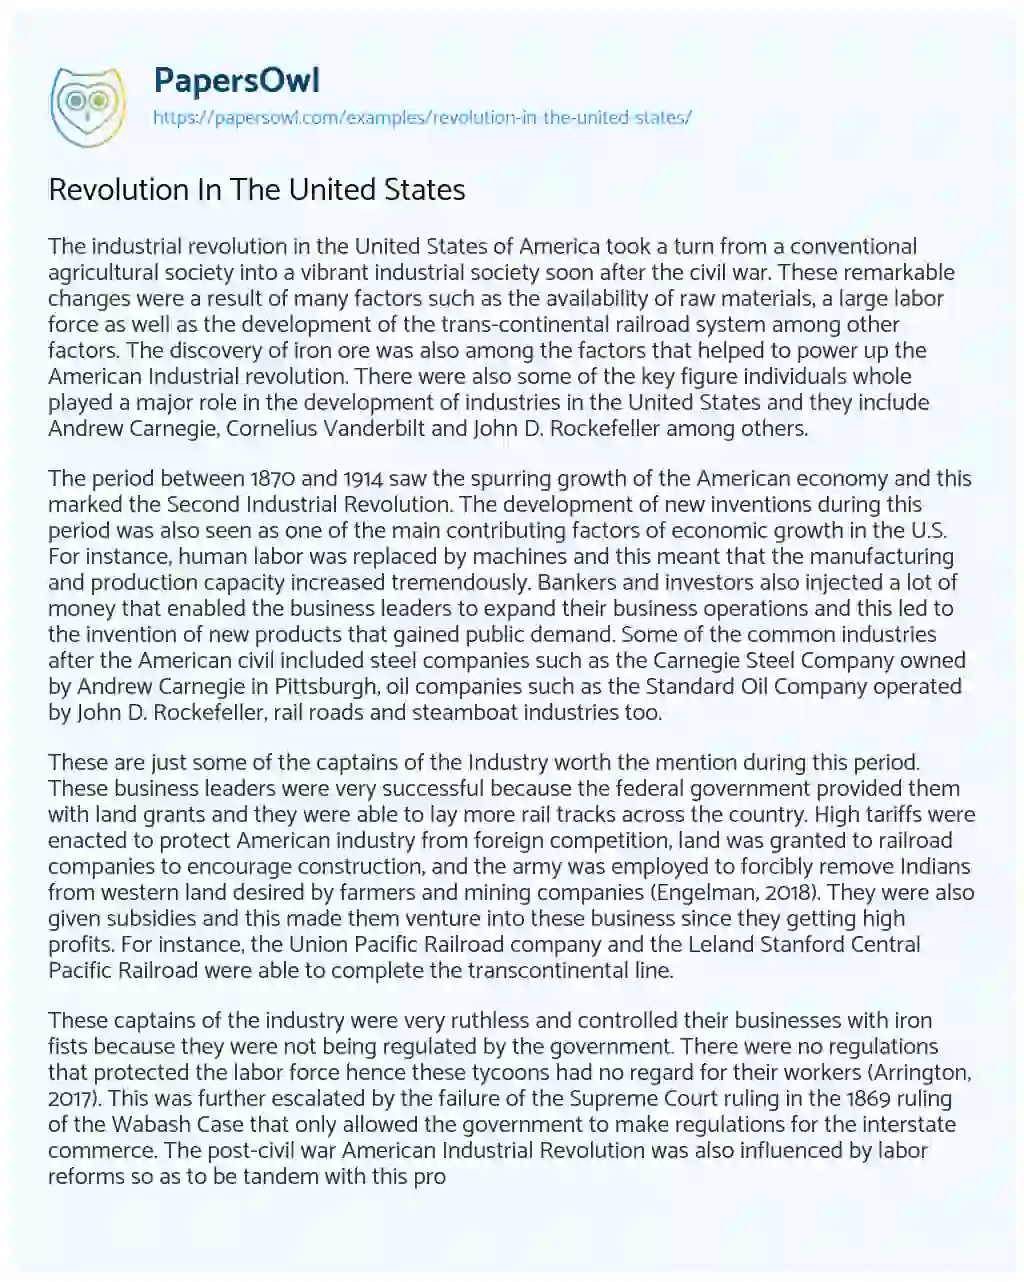 Revolution in the United States essay